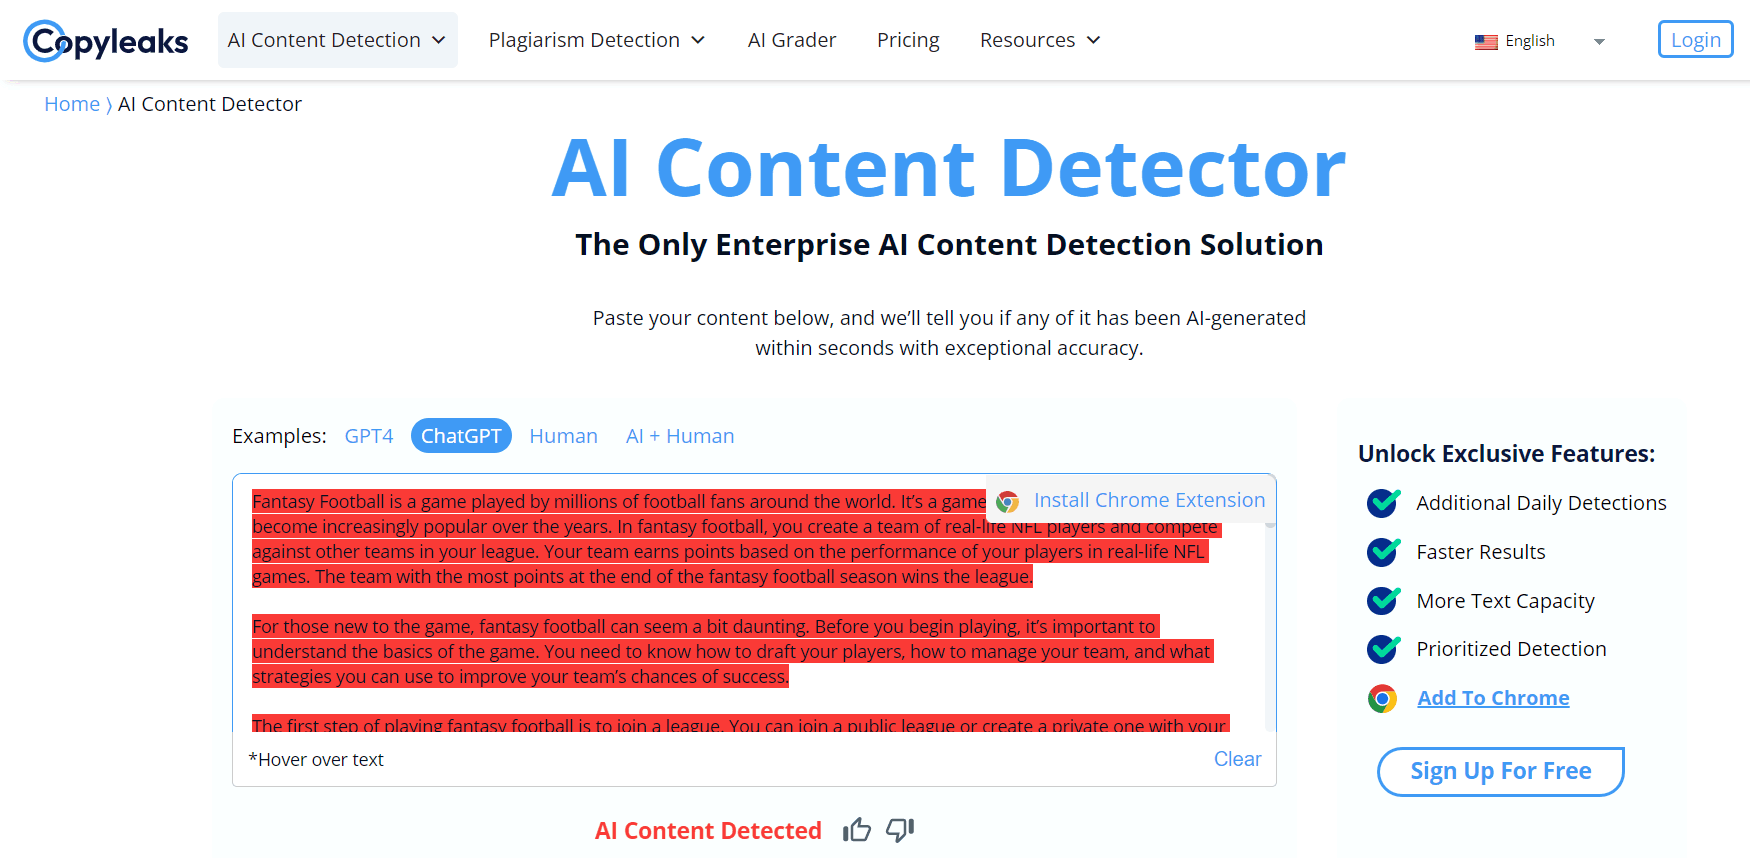 AI content detection tool - Copyleaks